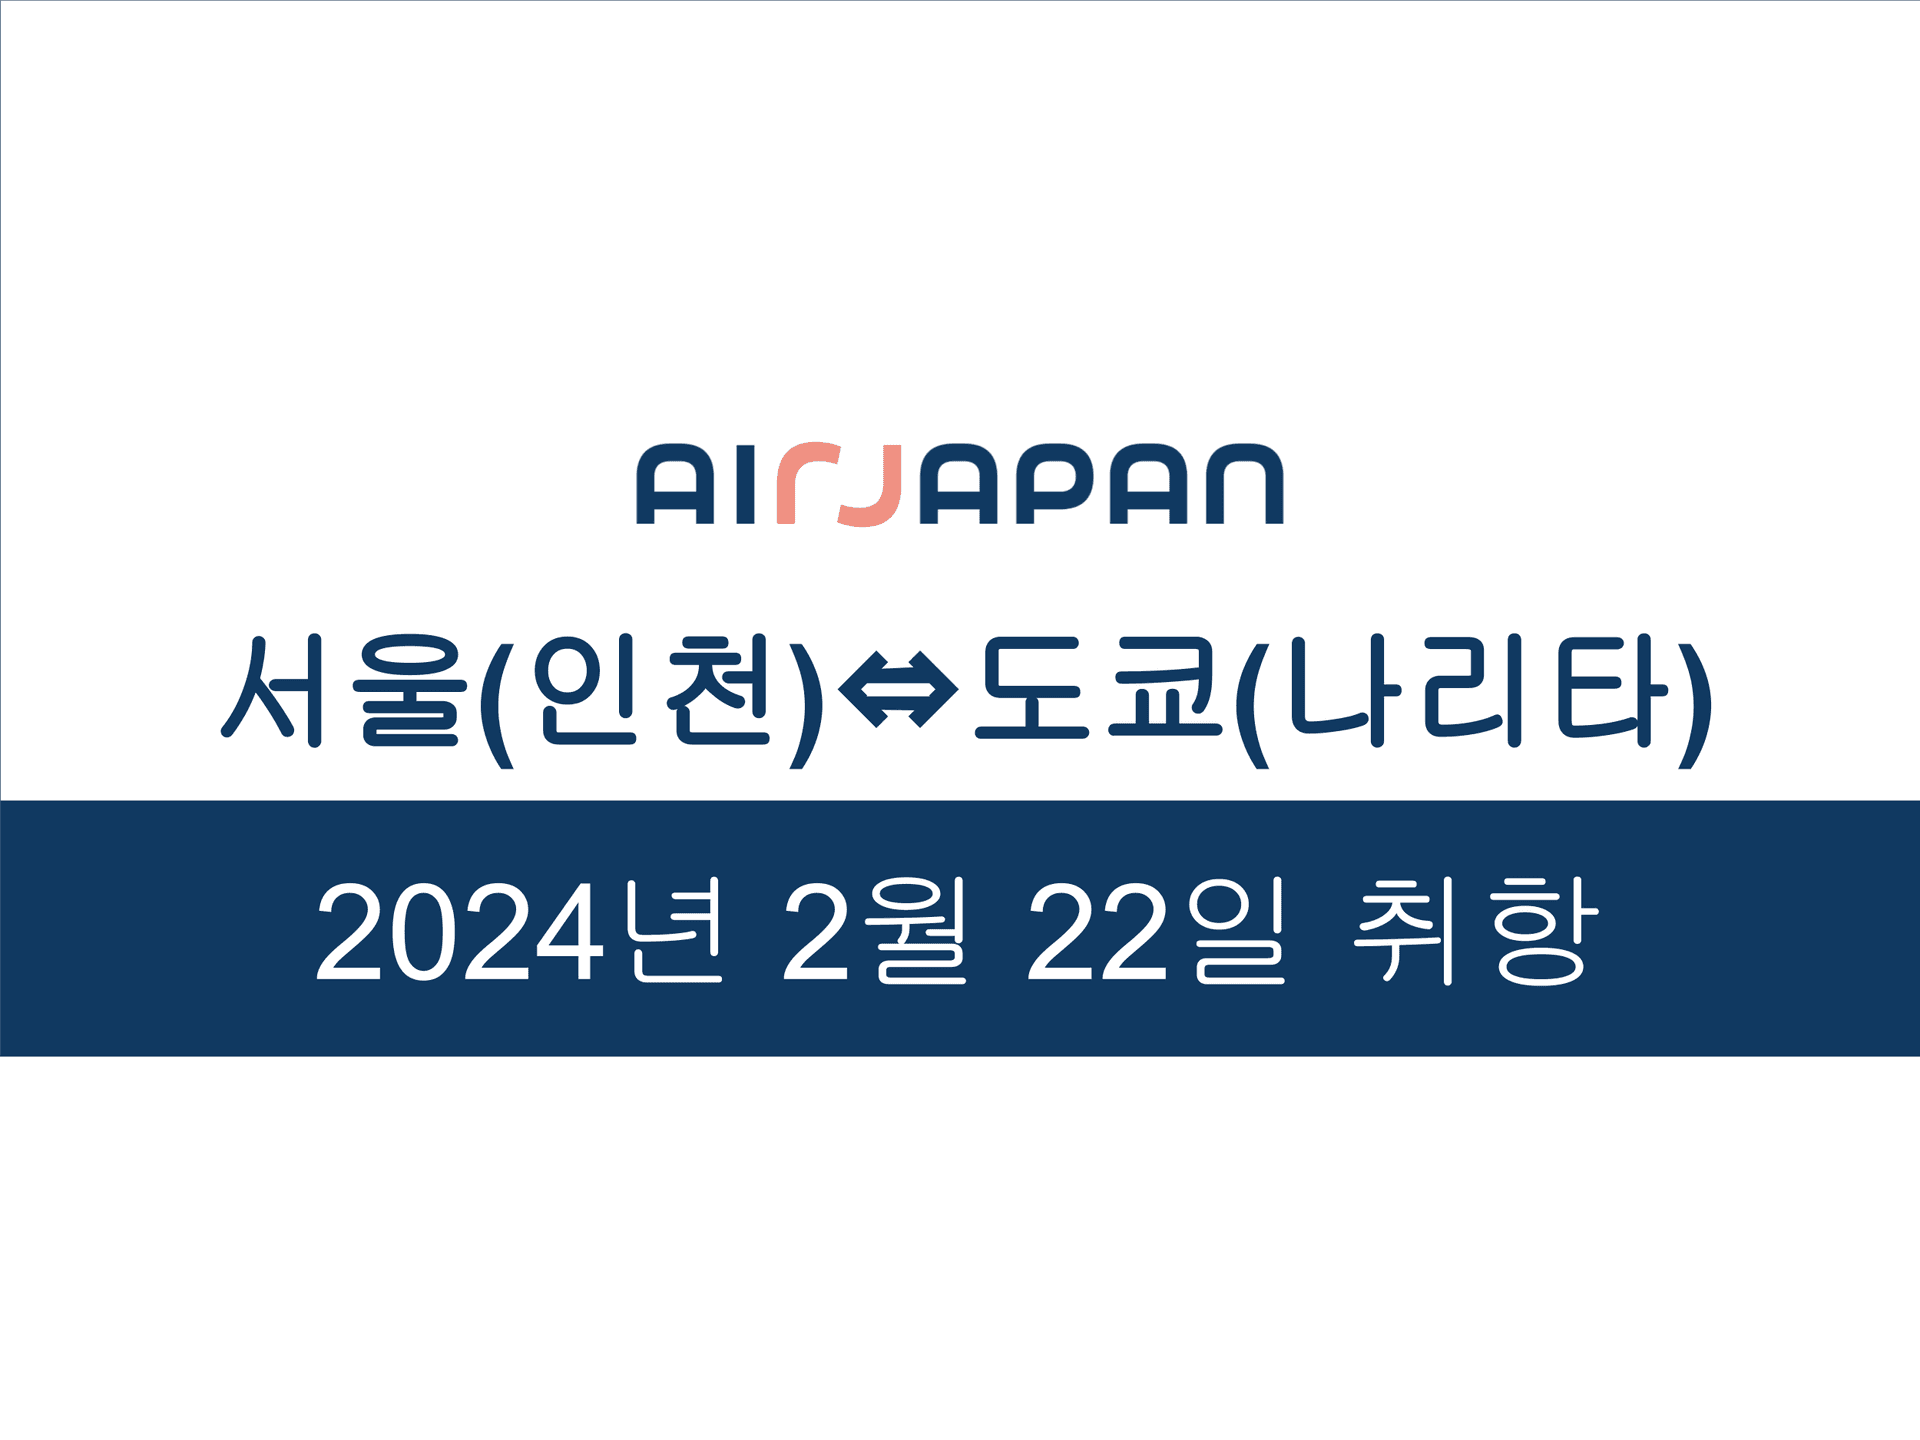 AirJapan은 2024년 2월 22일(목)부터 나리타⇔서울(인천)선으로 취항합니다!